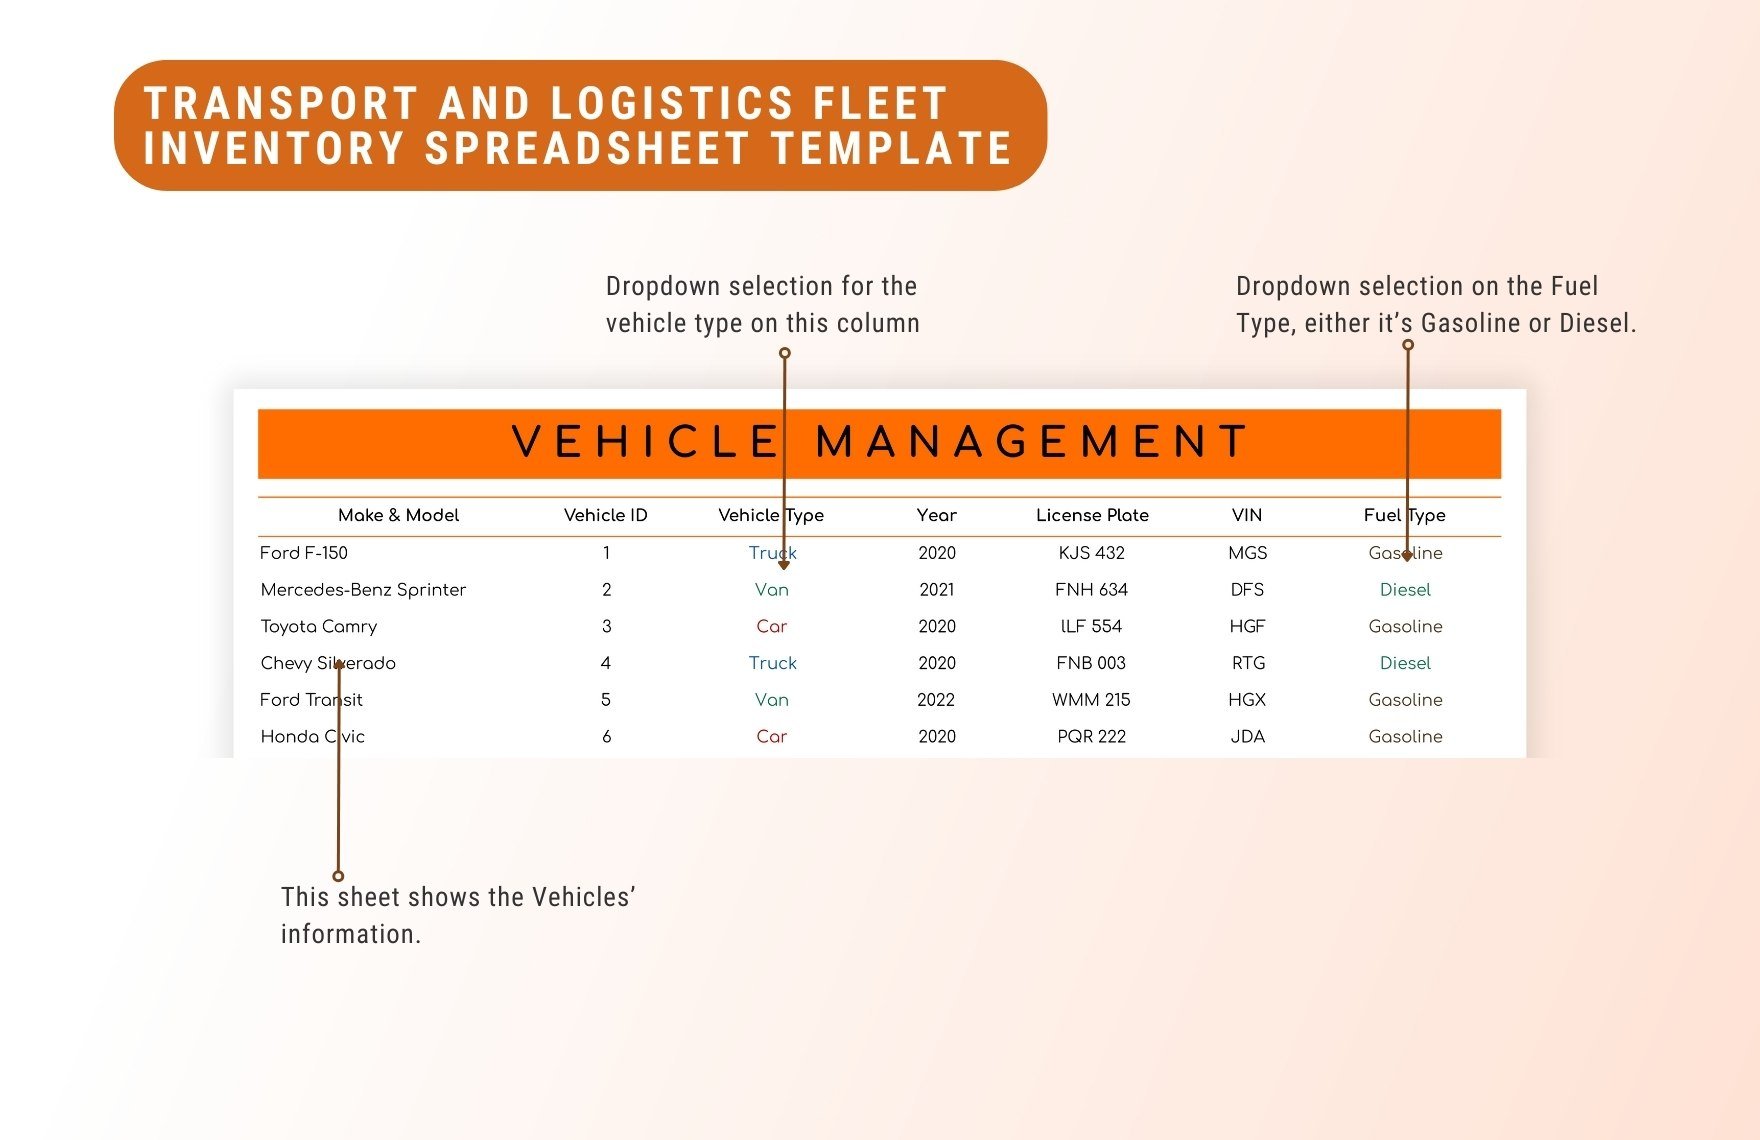 Transport and Logistics Fleet Inventory Spreadsheet Template